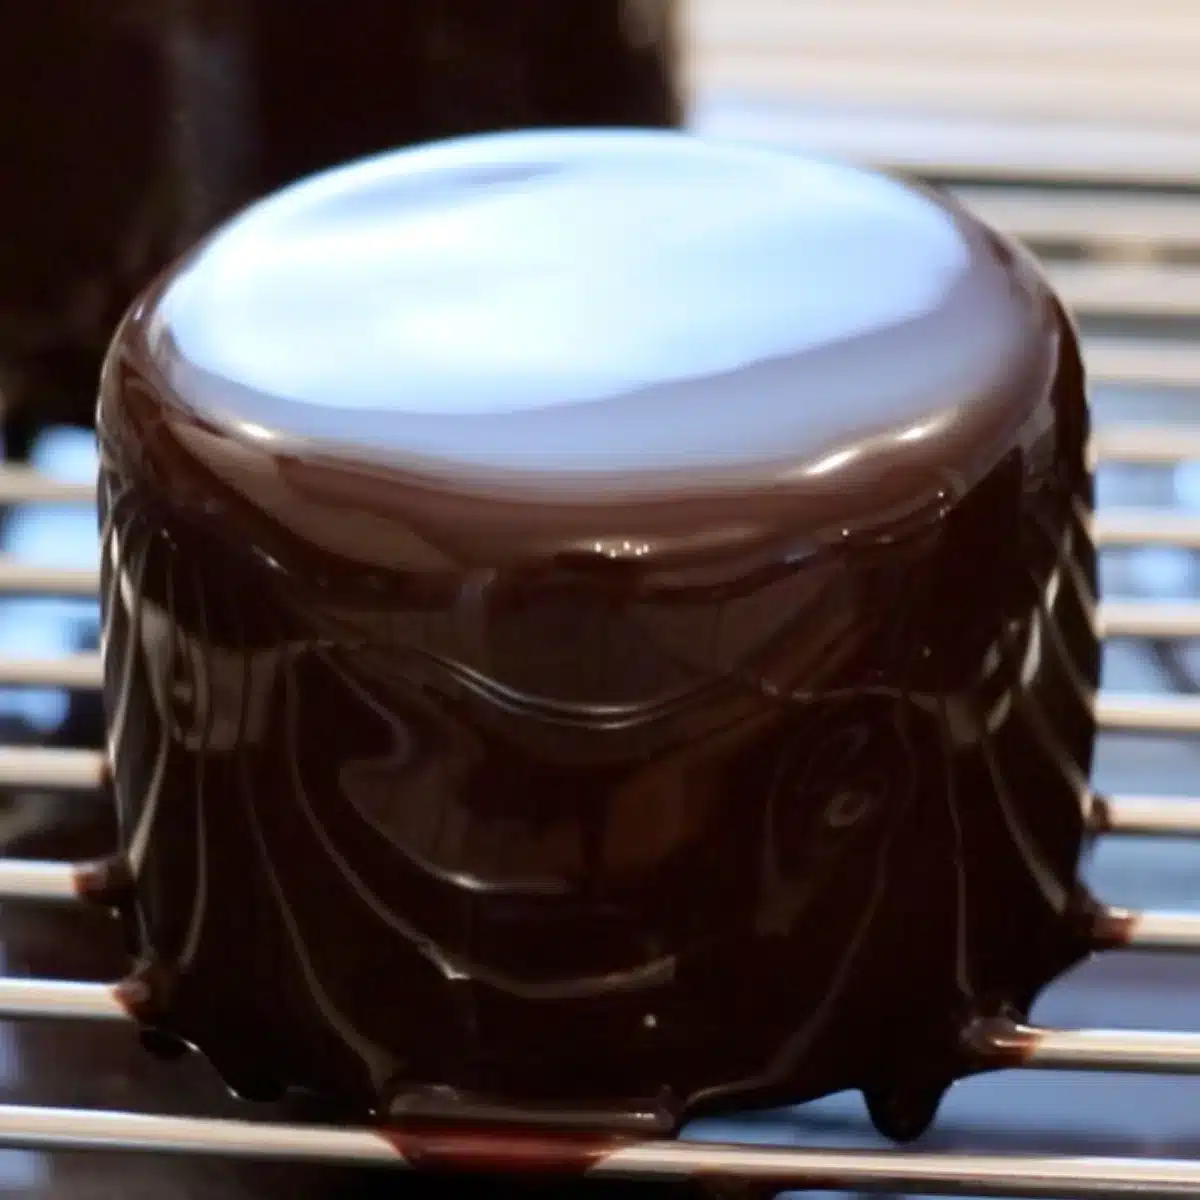 shiny chocolate mirror glaze cake on a rack